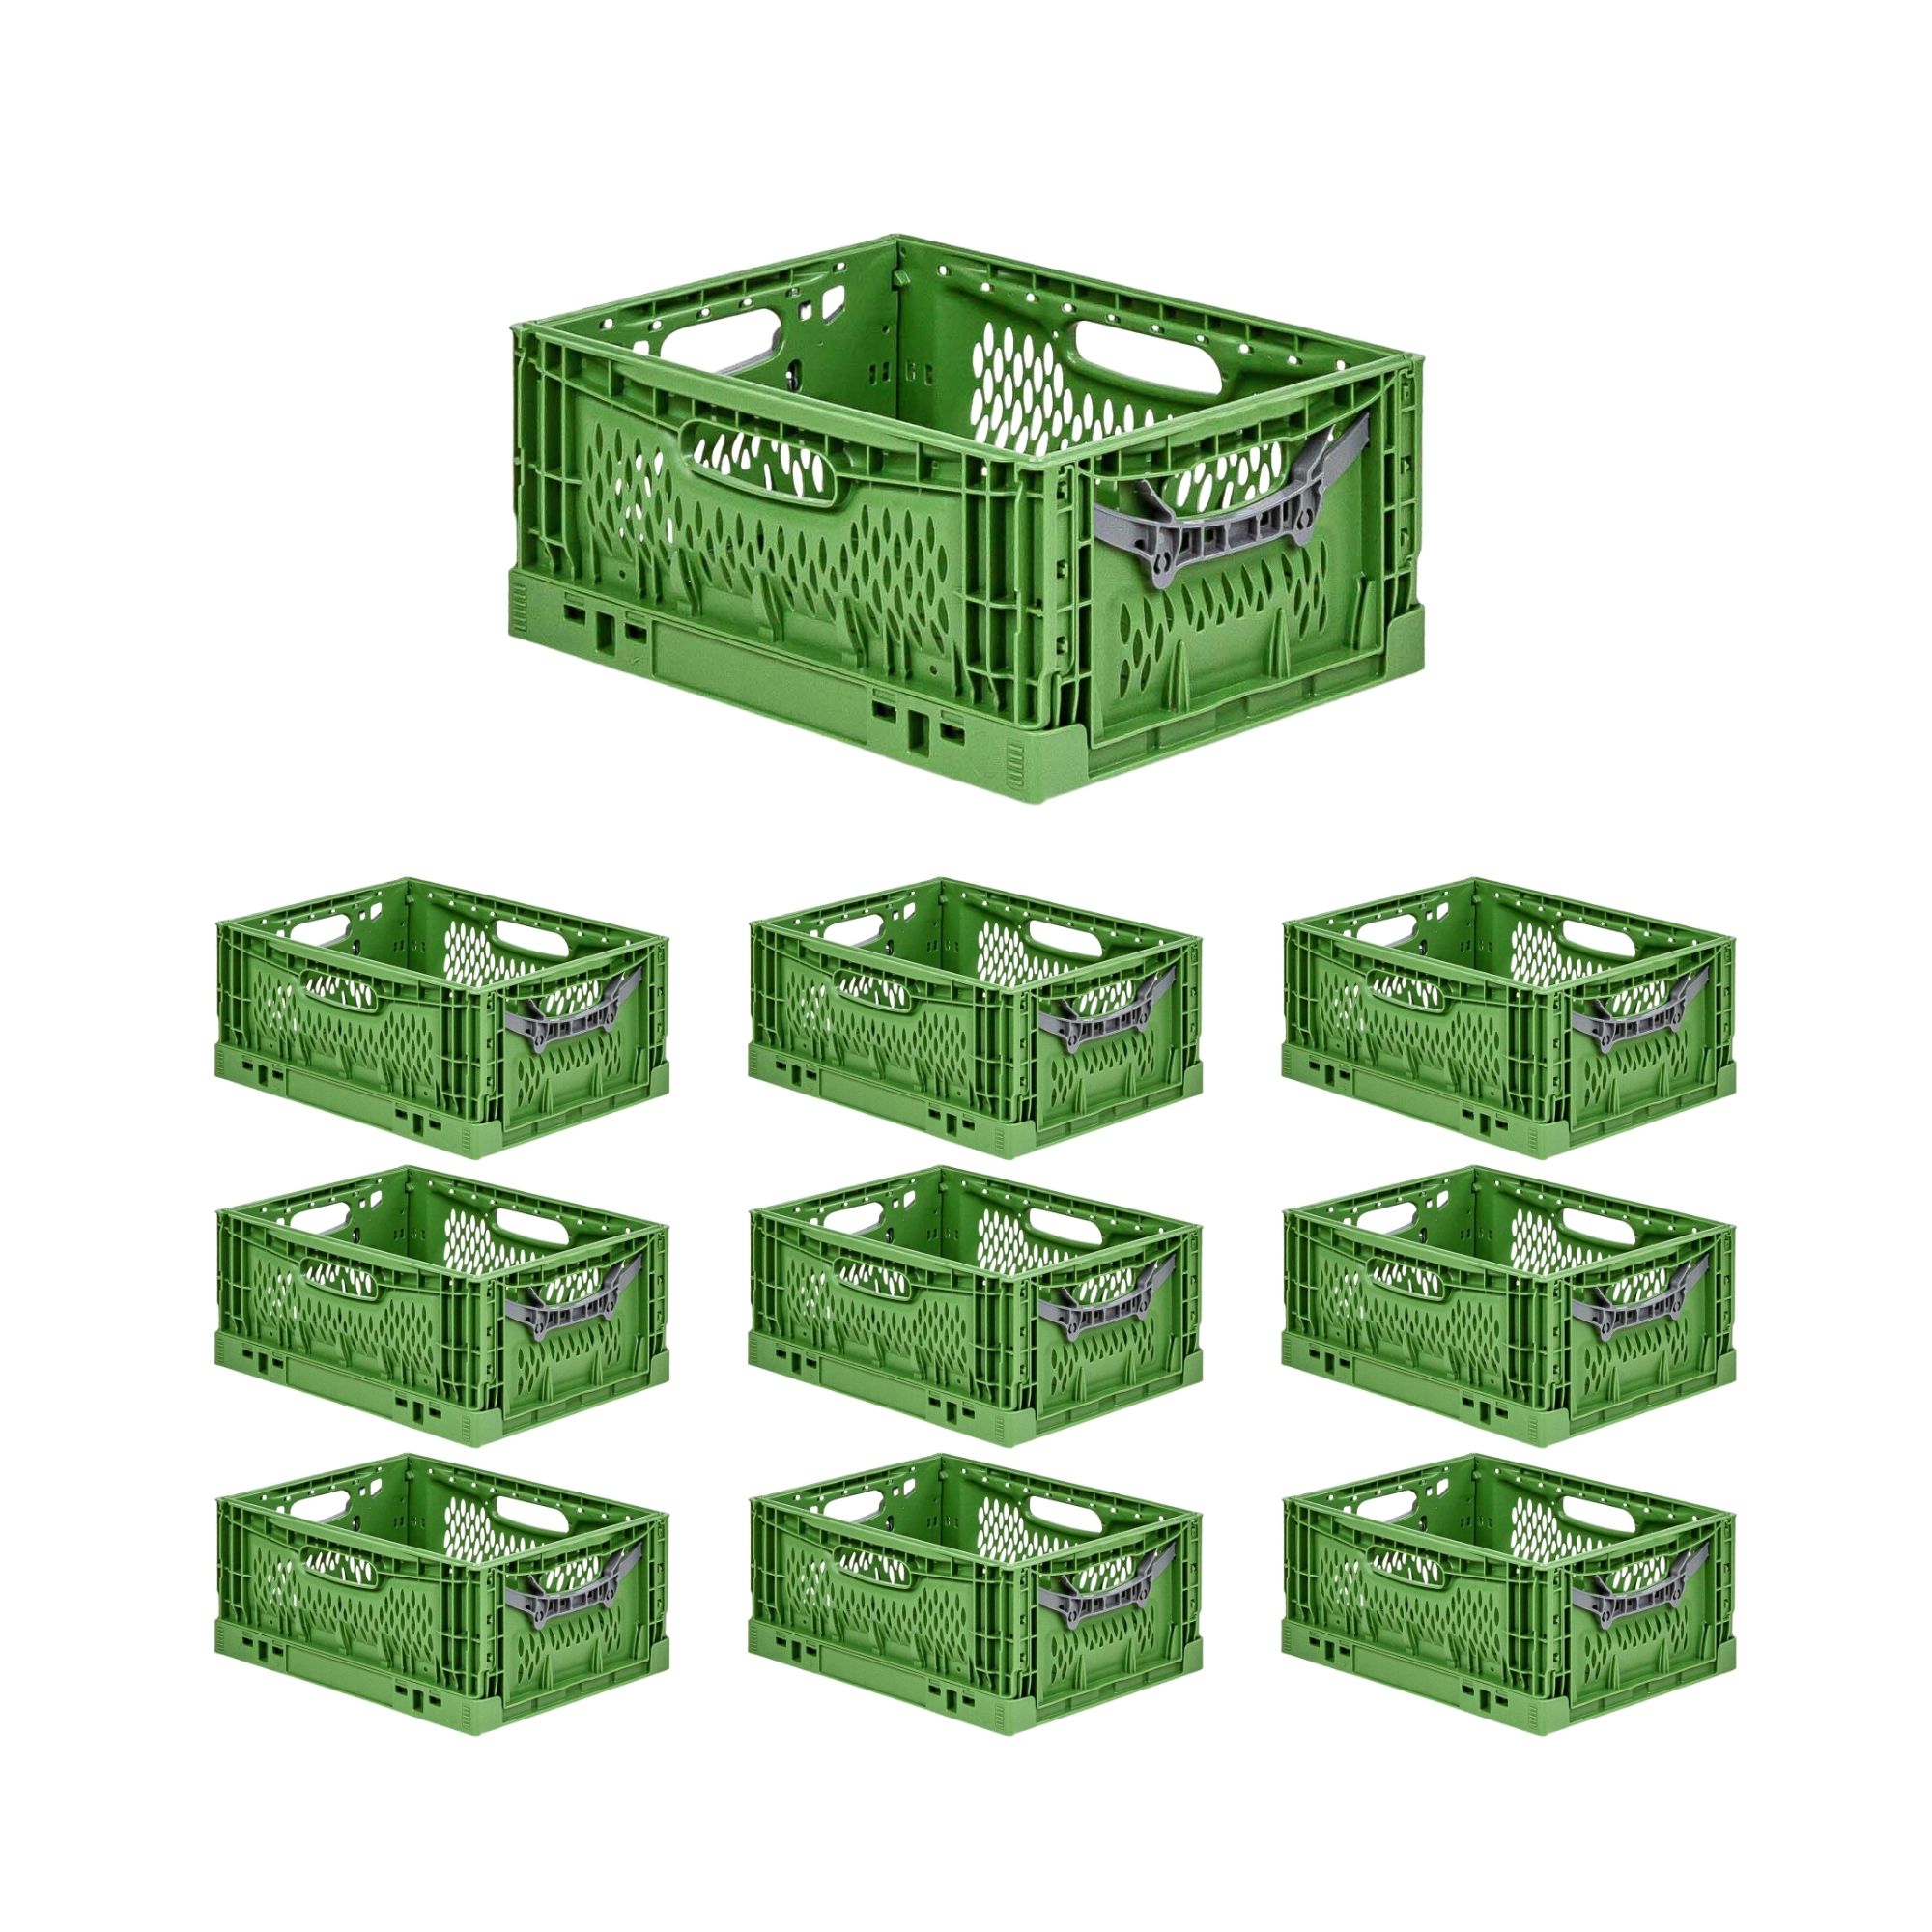 SuperSparSet 10x Stabile Profi-Klappbox Chameleon in Industriequalität | HxBxT 18x30x40cm | 17 Liter | klappbar stapelbar durchbrochen lebensmittelecht | Eurobox Eurobehälter Transportbehälter Stapelbehlter Faltbox